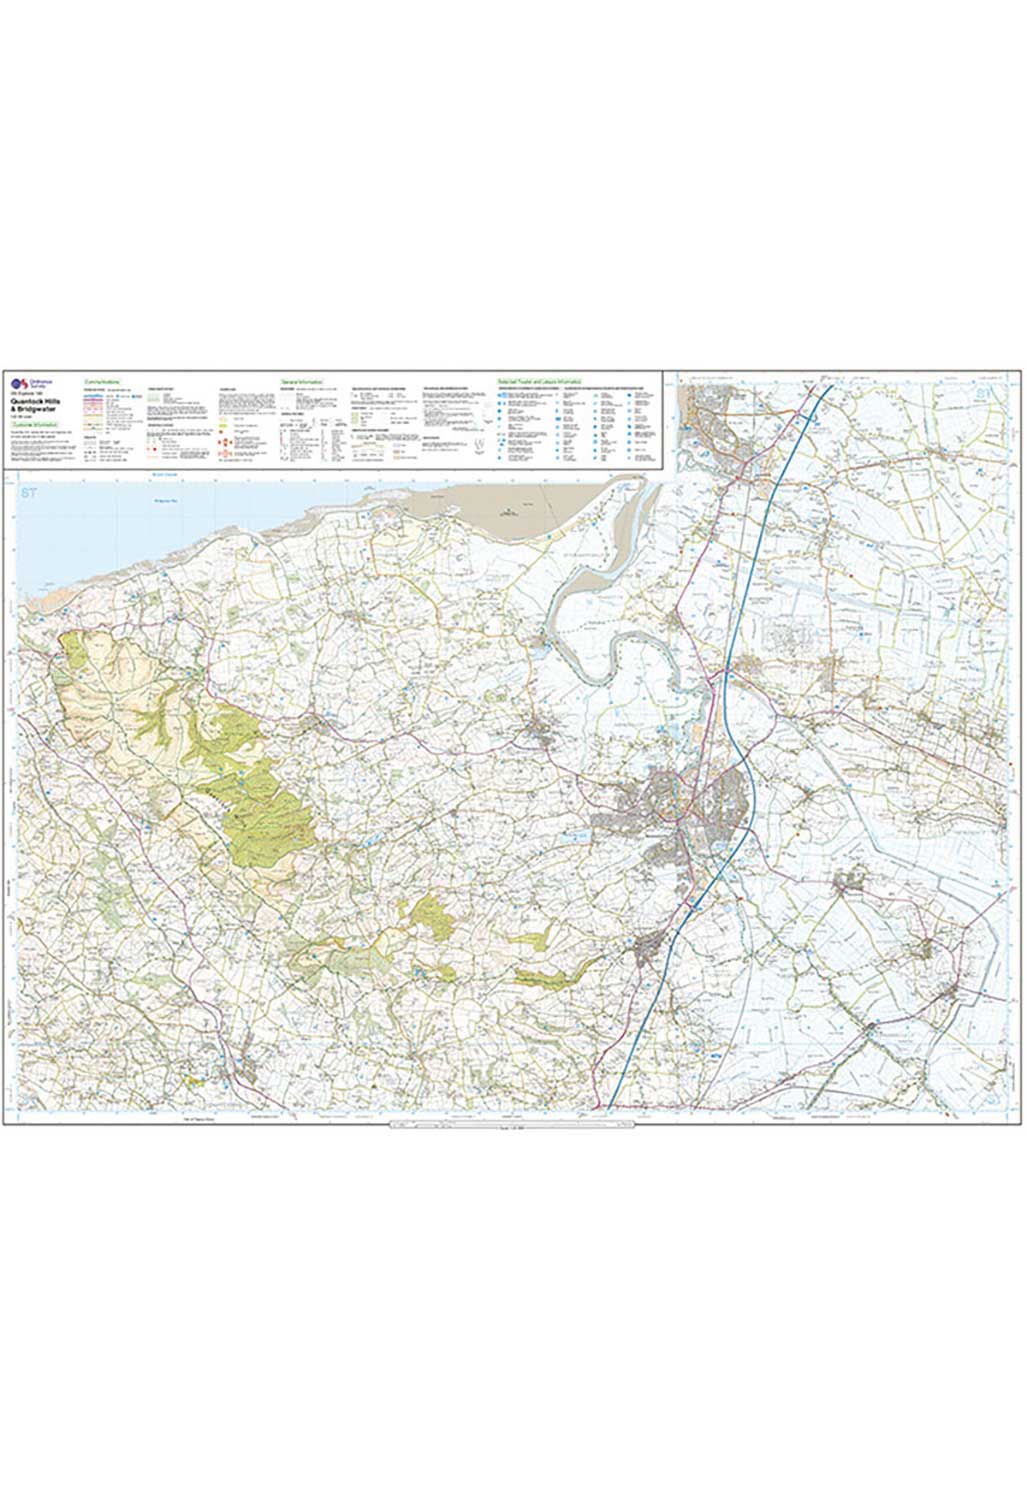 Ordnance Survey Quantock Hills & Bridgwater - OS Explorer 140 Map